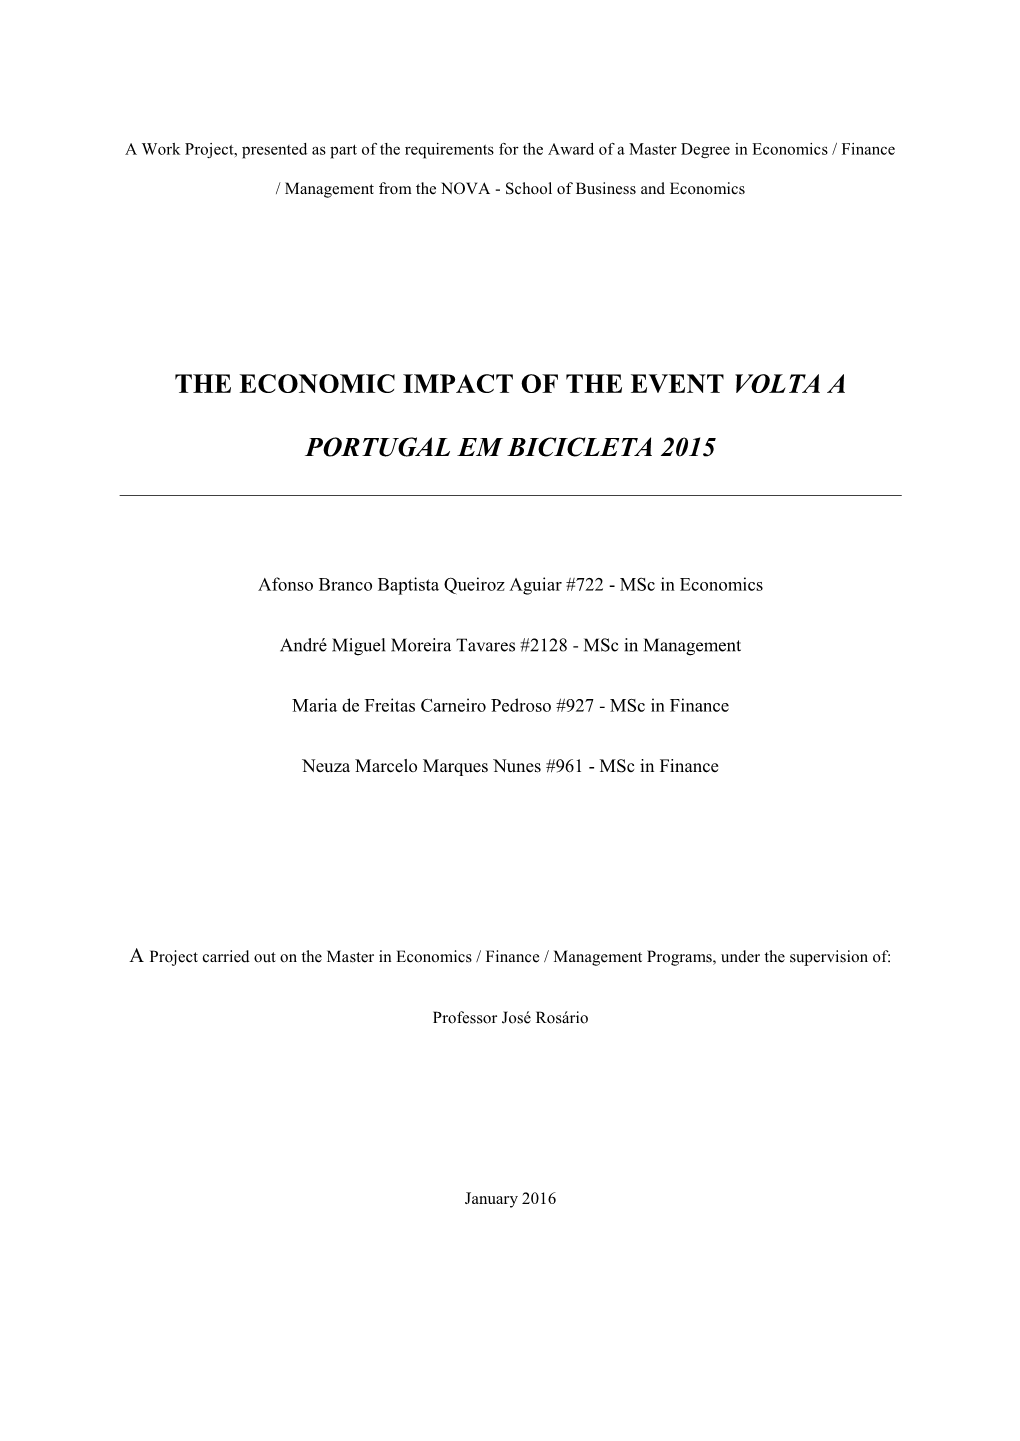 The Economic Impact of the Event Volta a Portugal Em